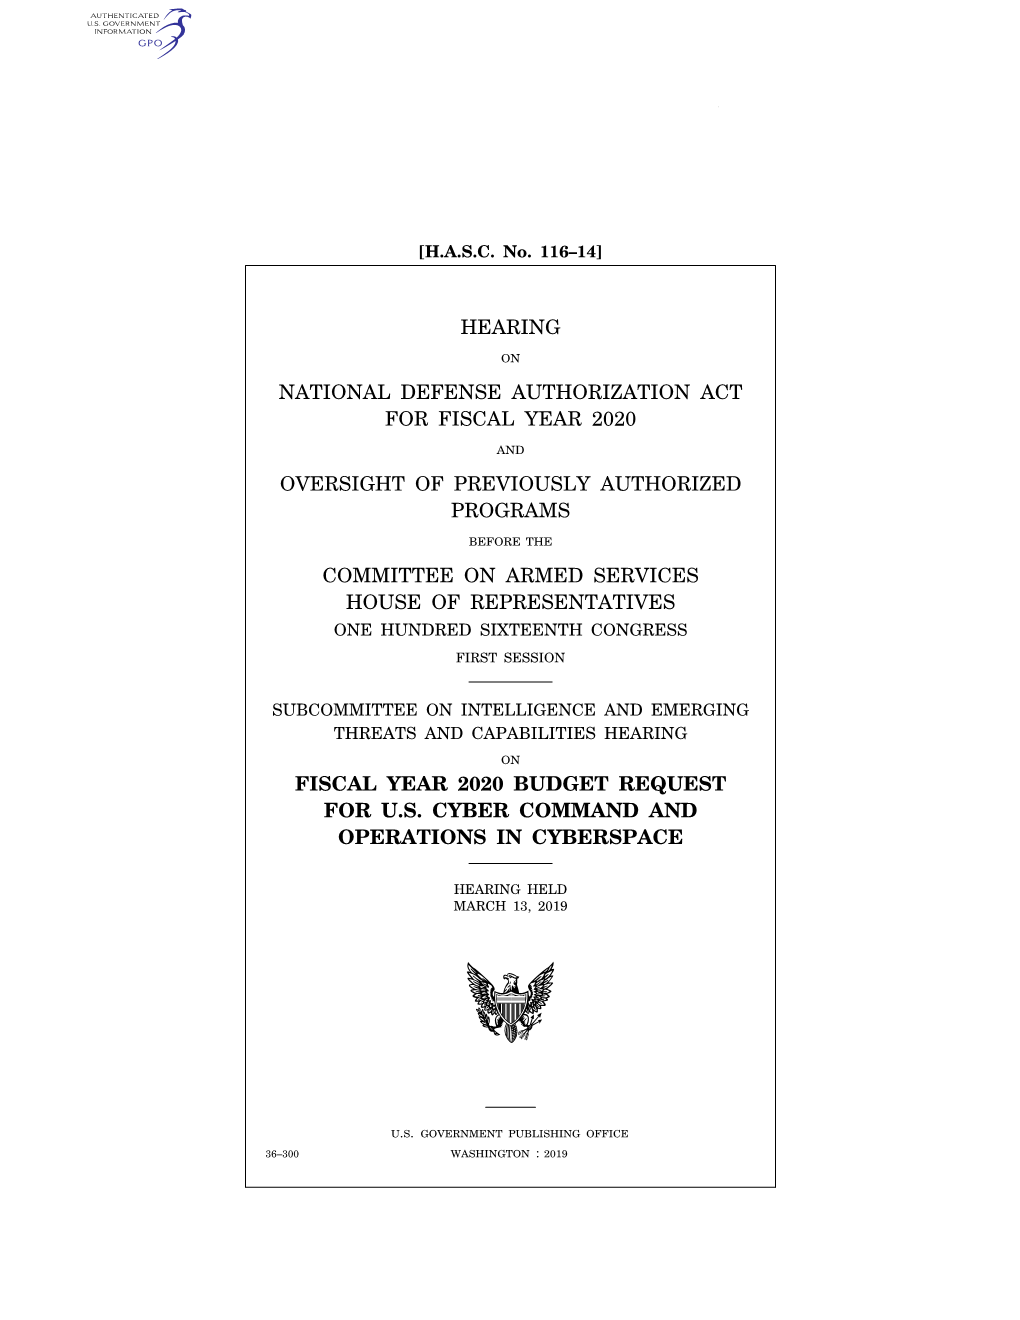 Hearing National Defense Authorization